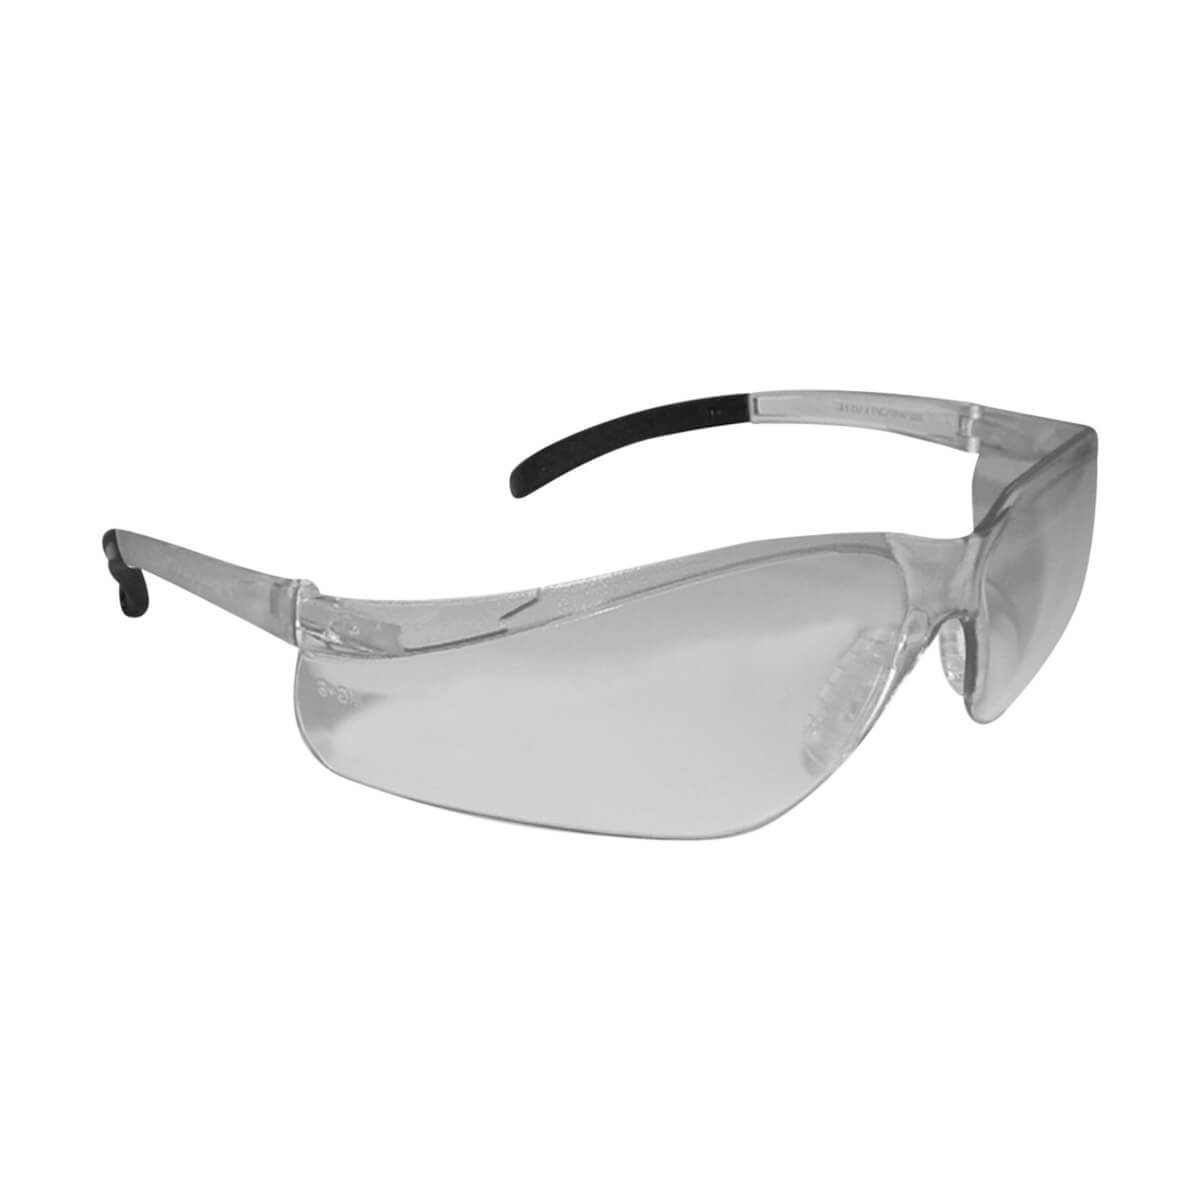 Phantom Protective Eyewear - Clear Lens